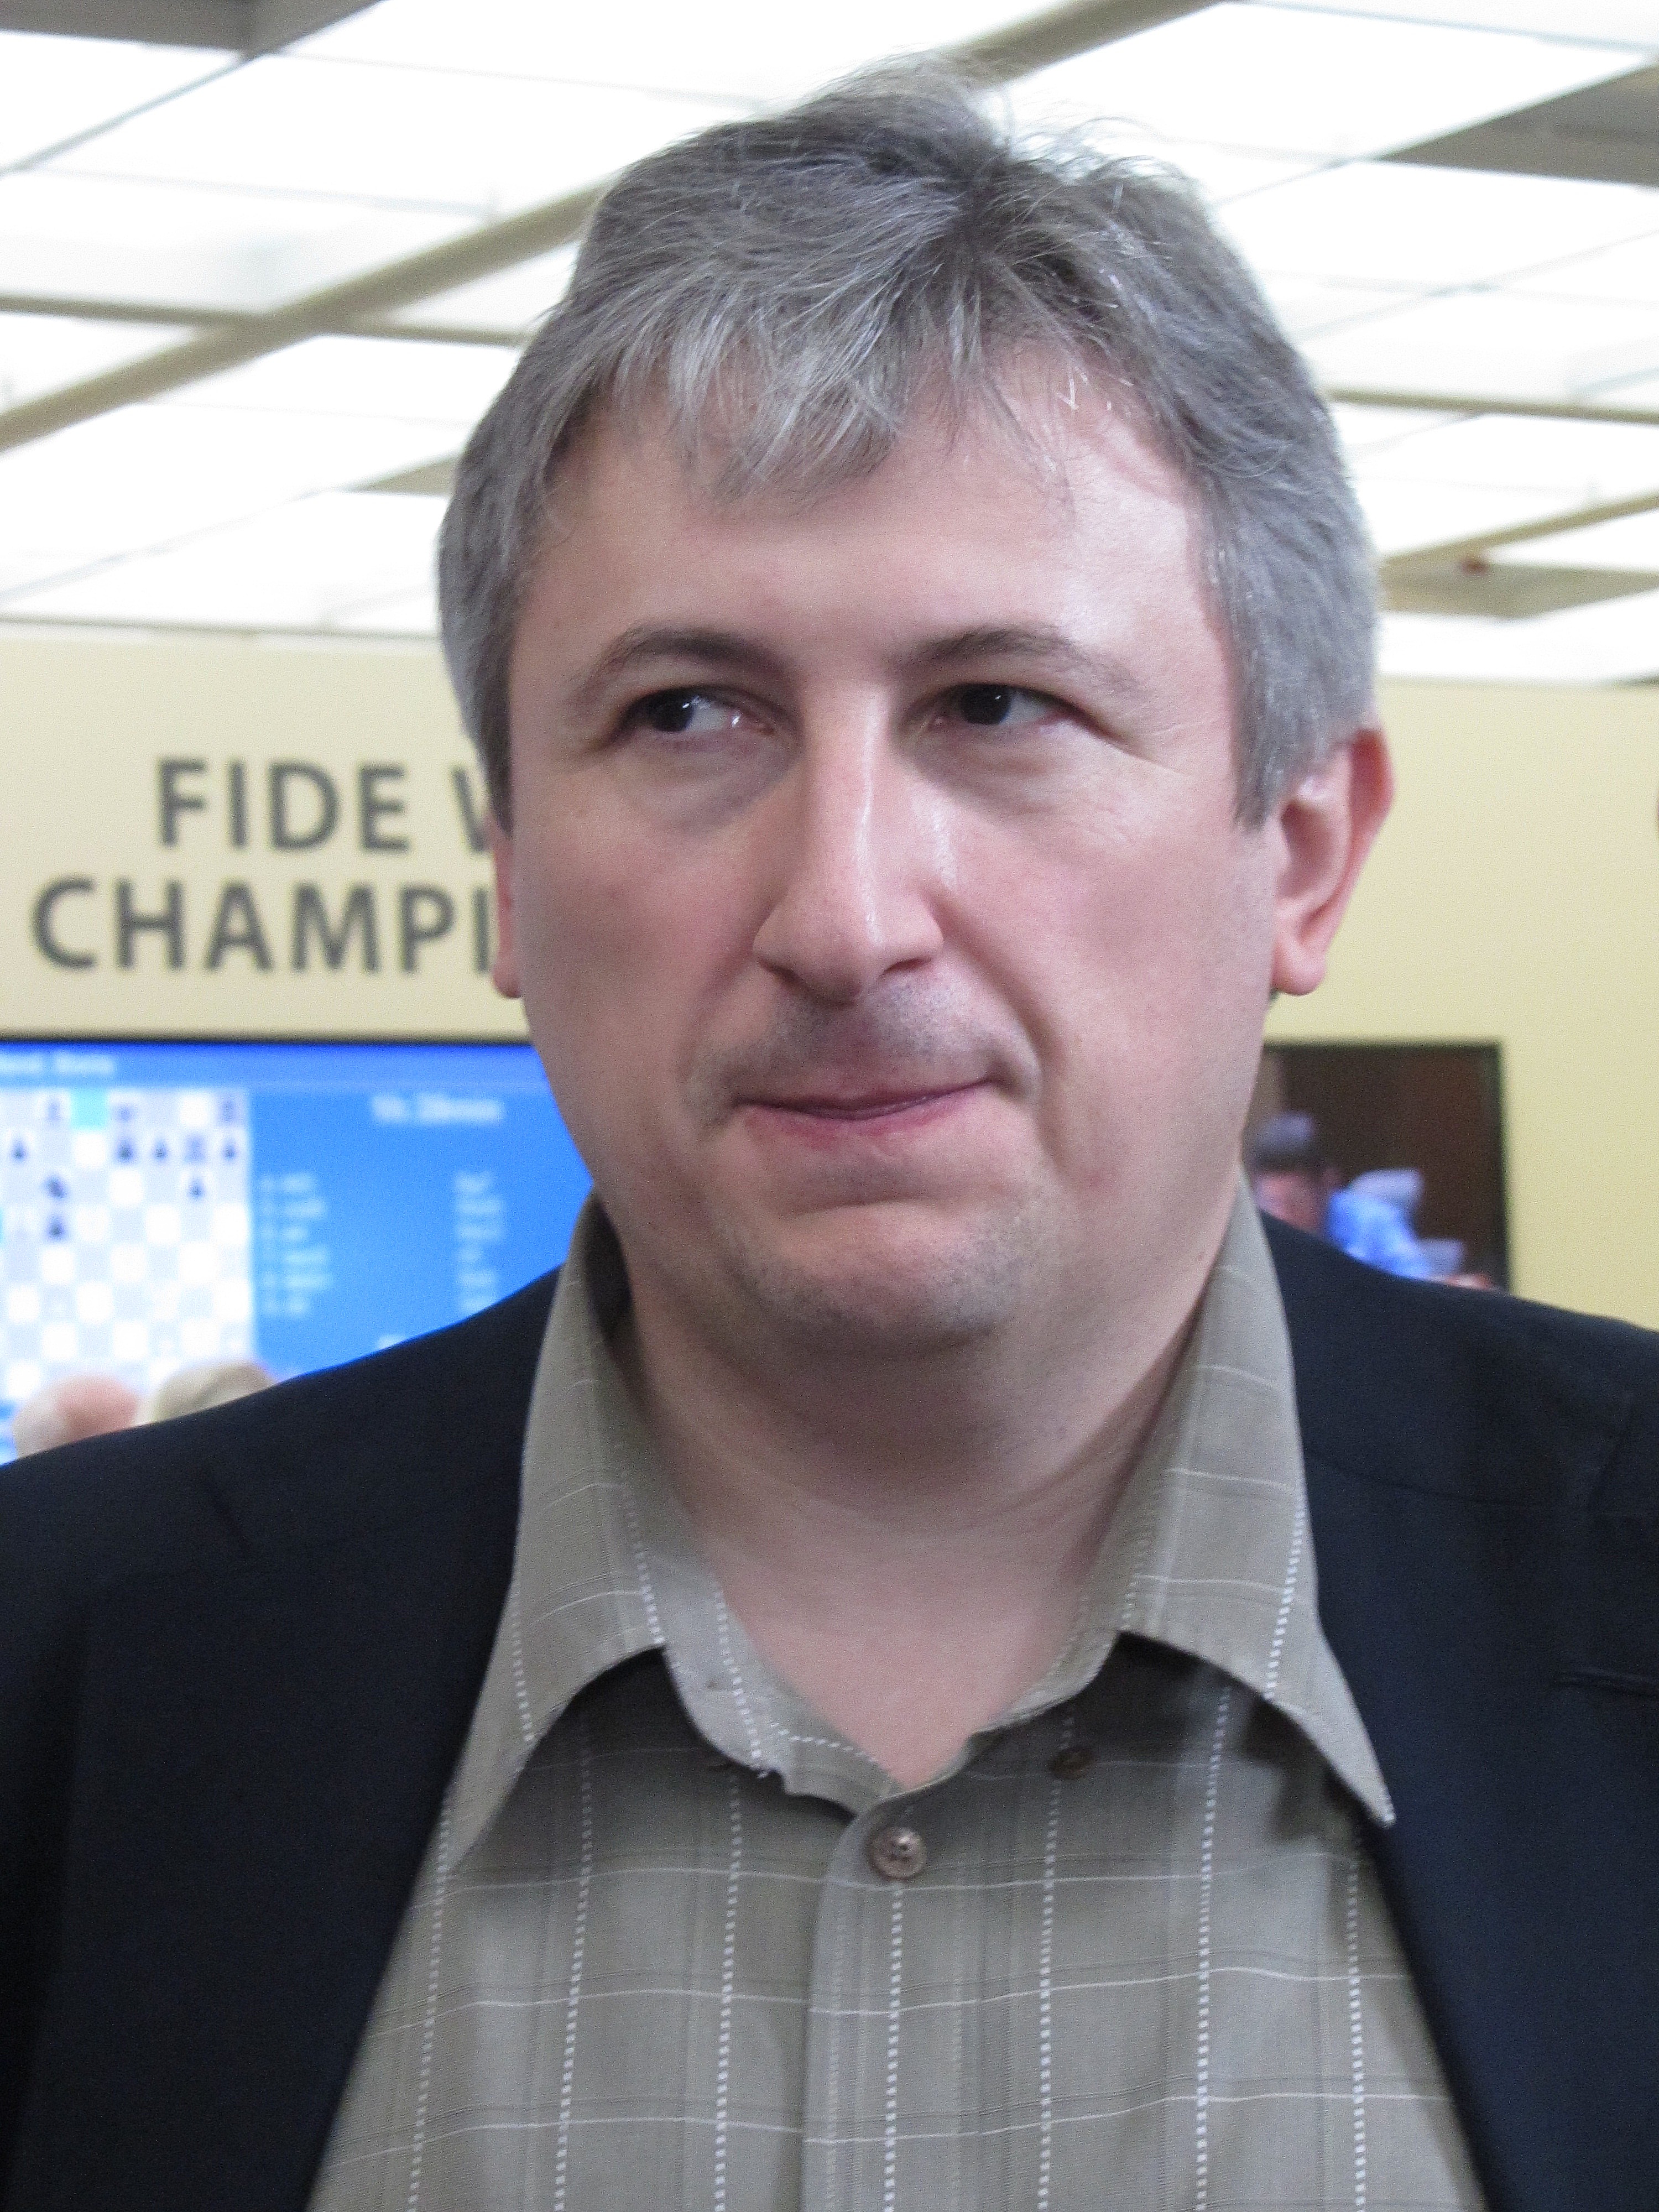 Russian Chess Legend Anatoly Karpov Unable to Get U.S. Visa, Friend Says